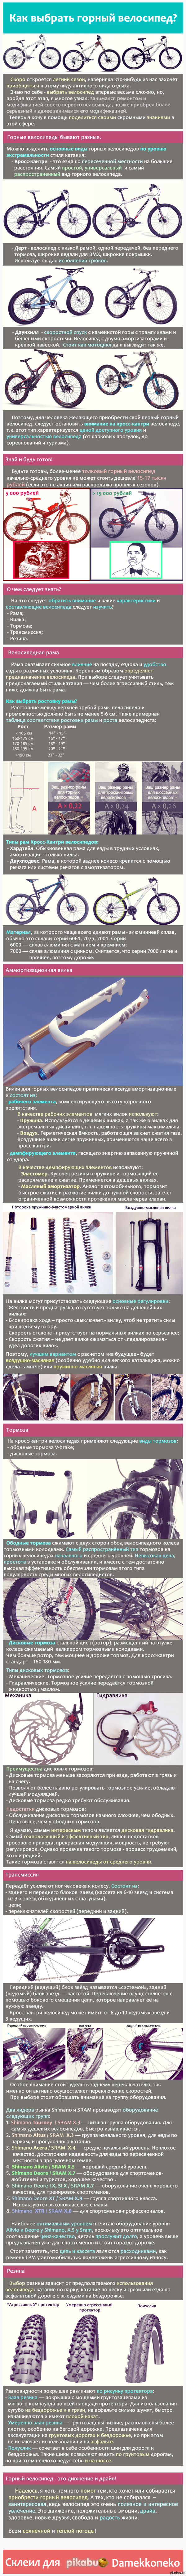 http://s4.pikabu.ru/post_img/2014/03/30/10/1396194884_608667471.jpg